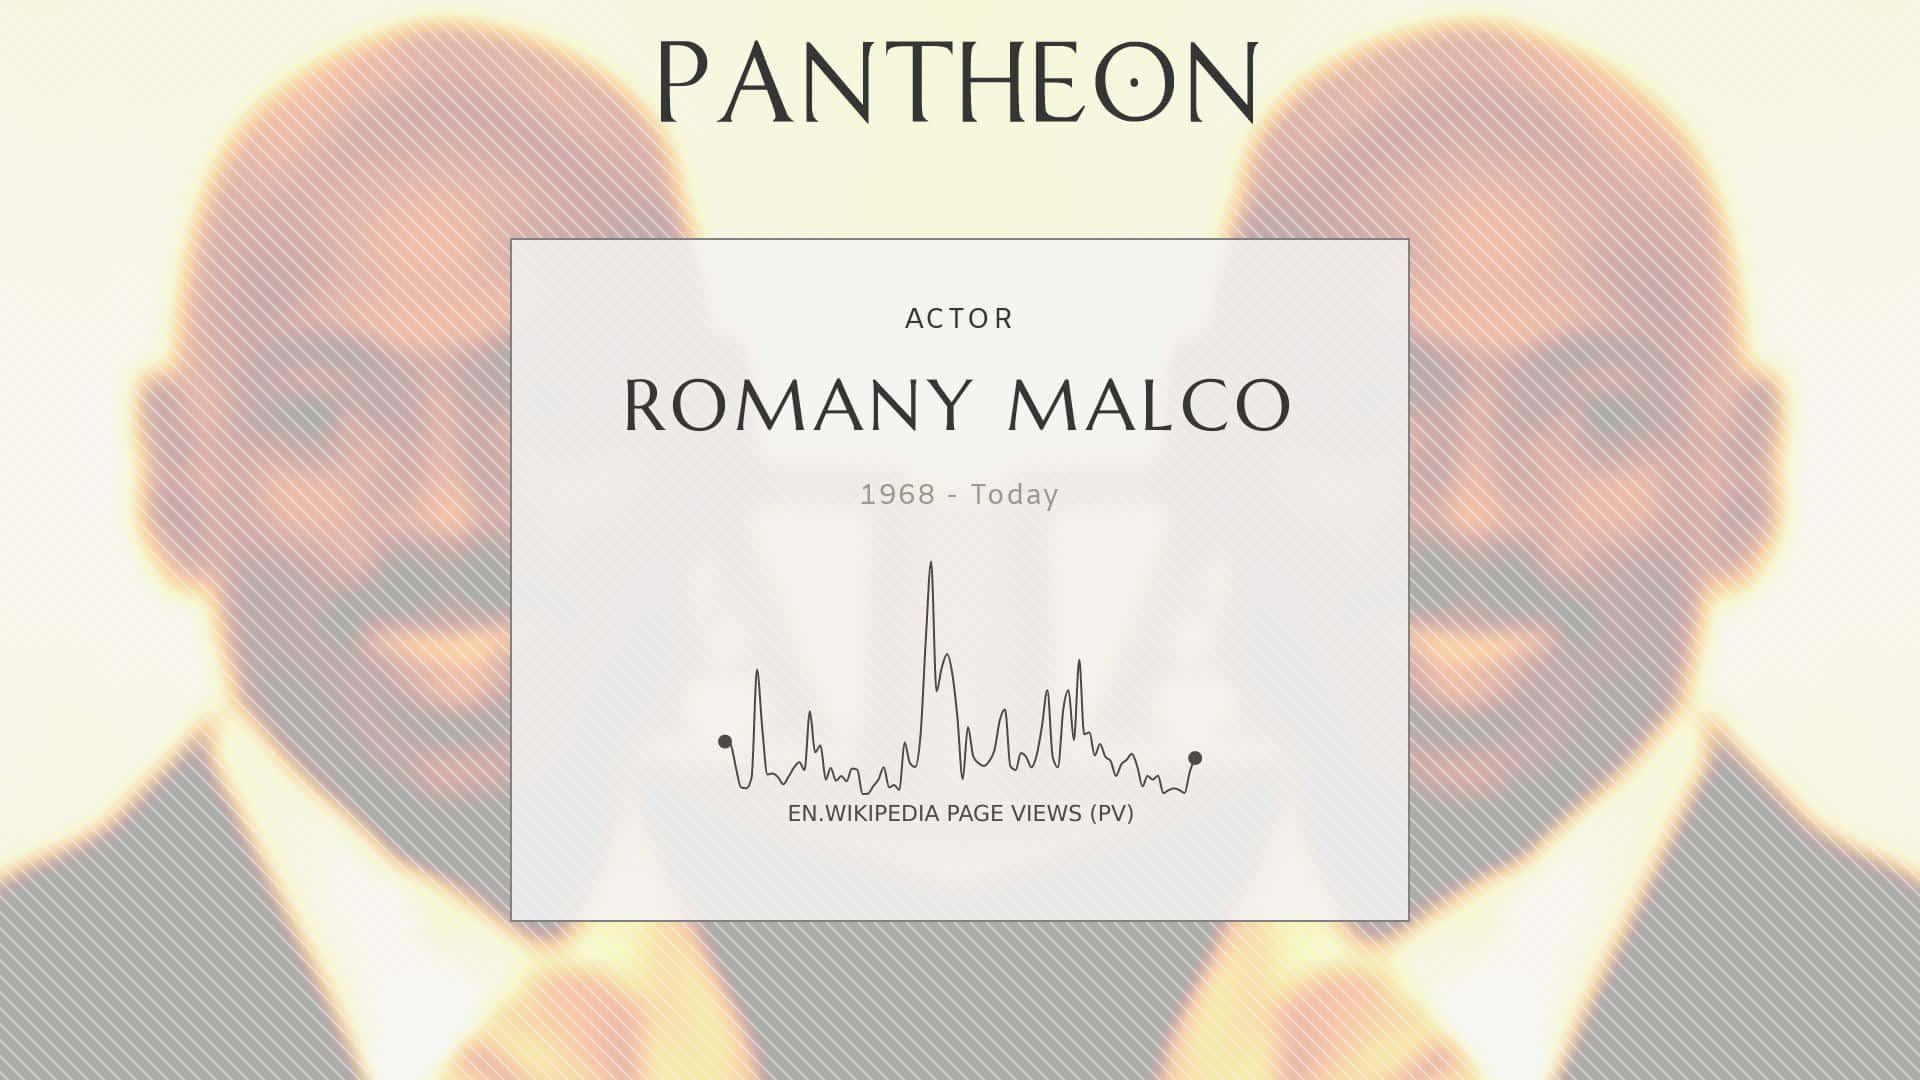 Romanymalco Pantheon Profilvisningsdiagram. Wallpaper